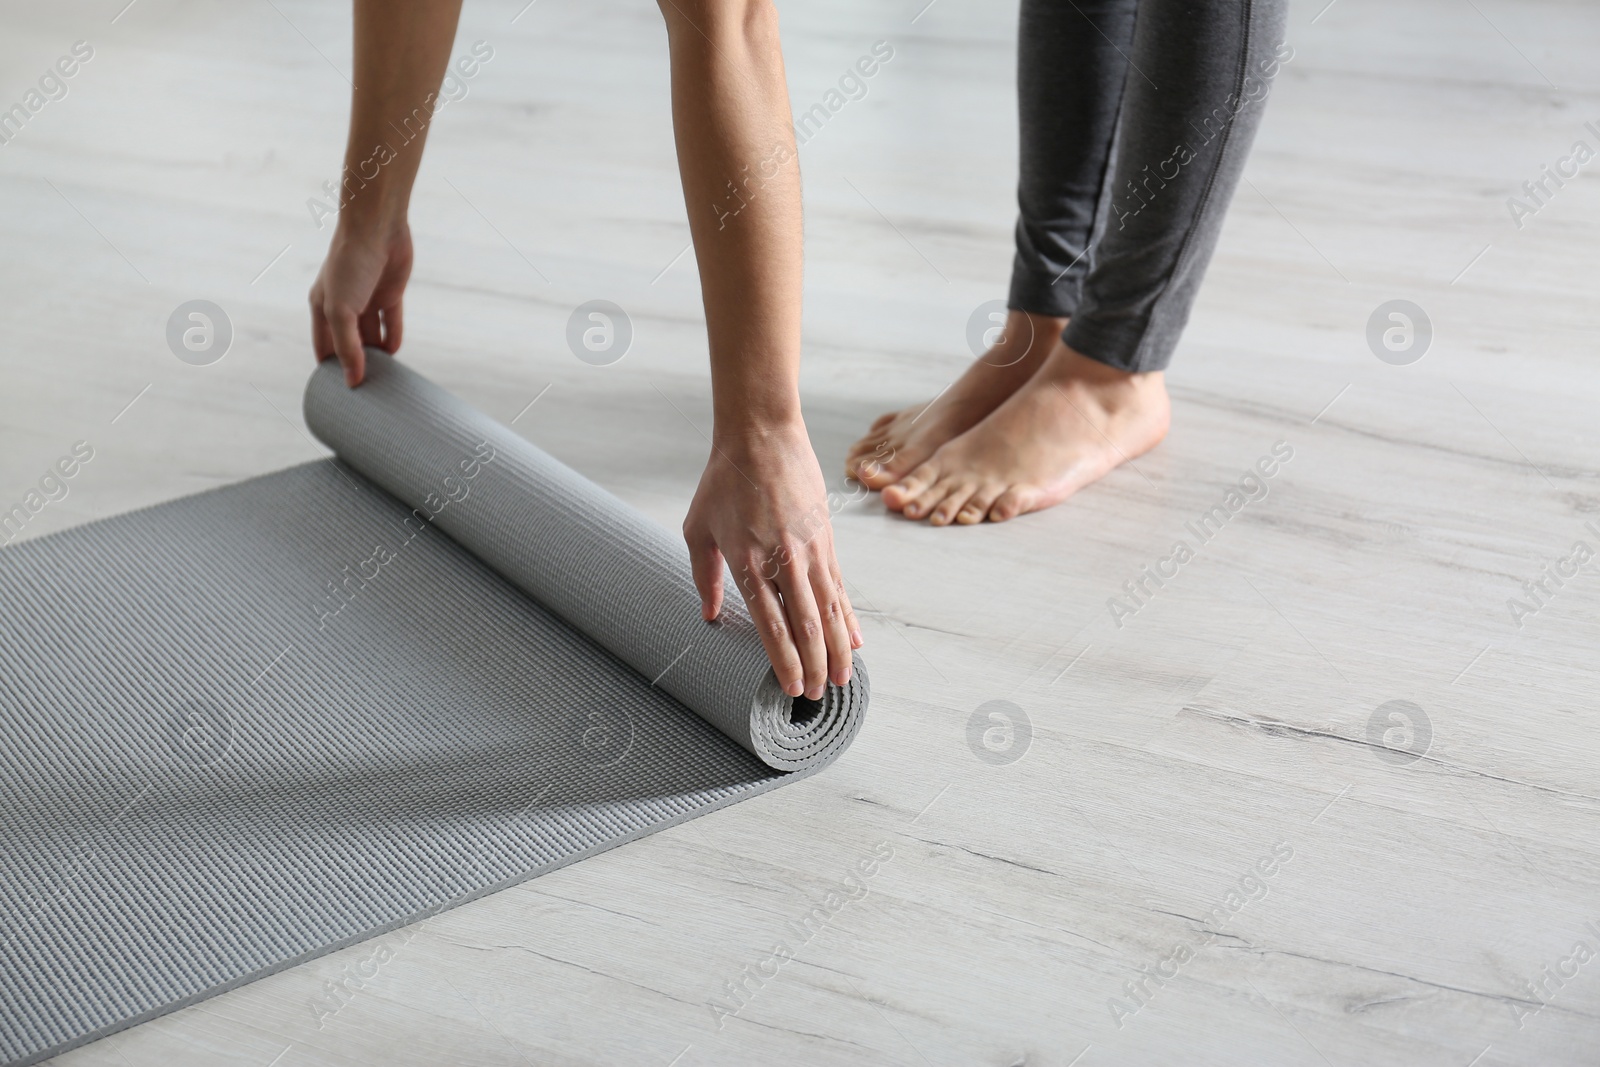 Photo of Woman rolling yoga mat on floor indoors, closeup